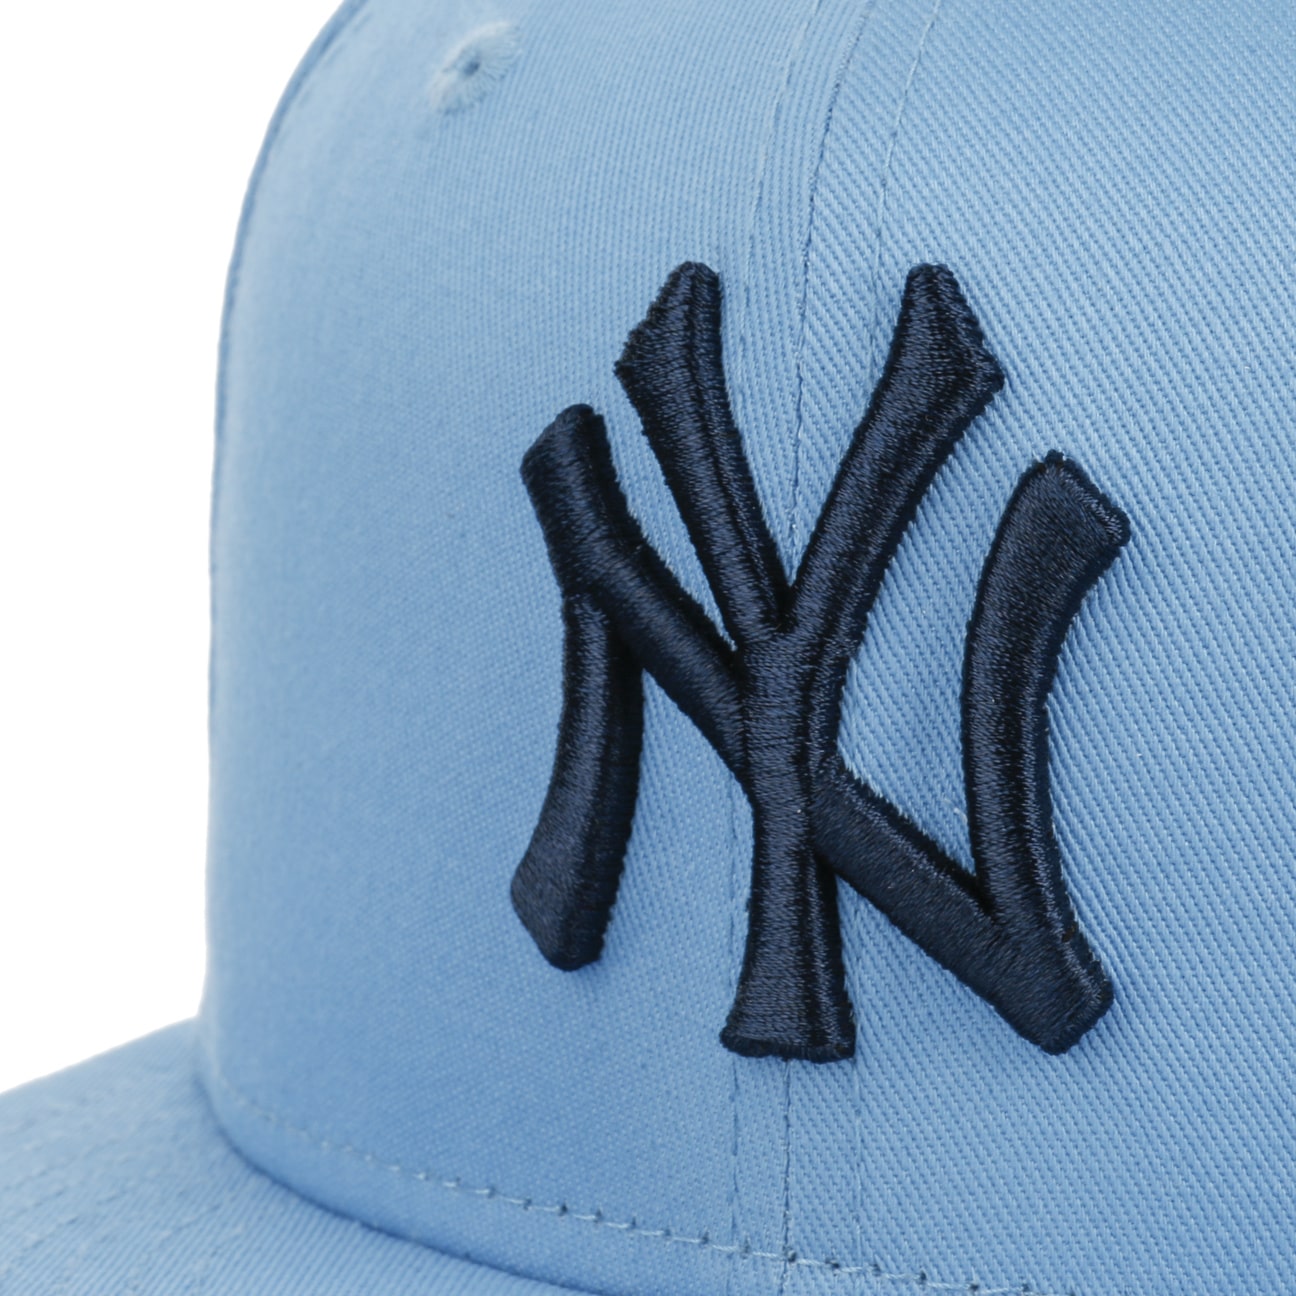 New Era Flat Brim 59FIFTY League Essential New York Yankees Dark Green Fitted Cap